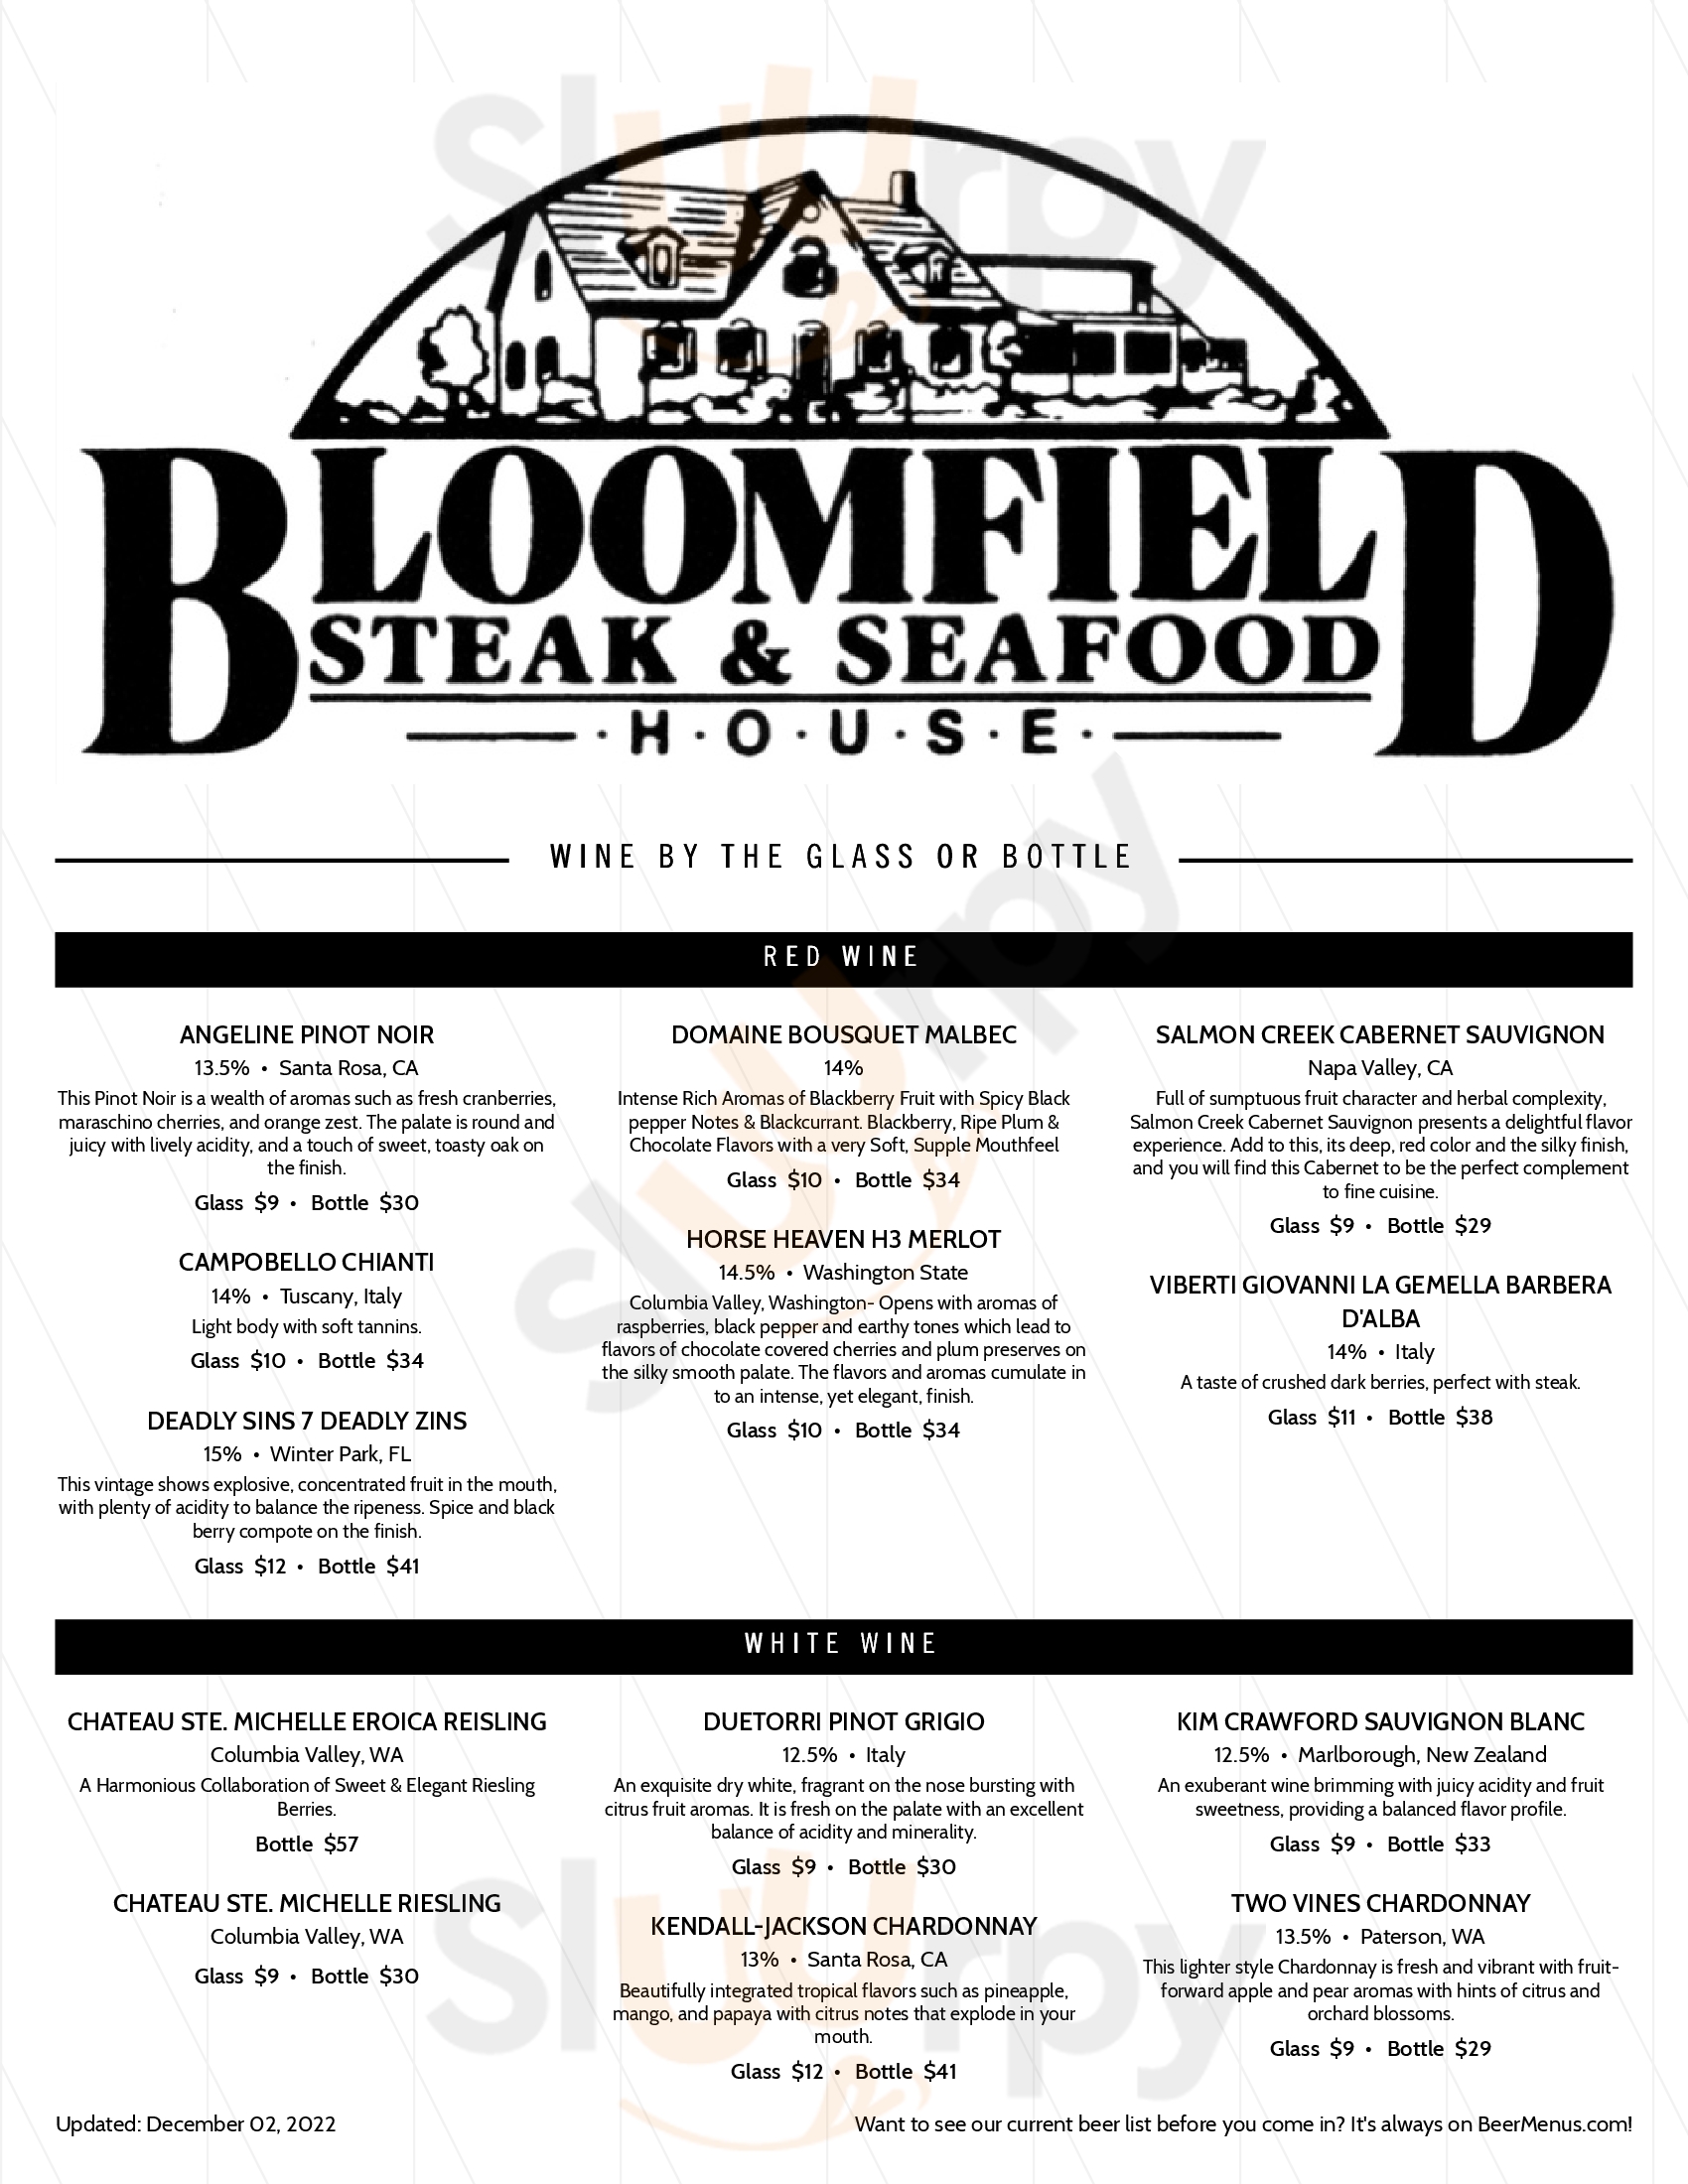 Bloomfield Steak & Seafood House Bloomfield Menu - 1